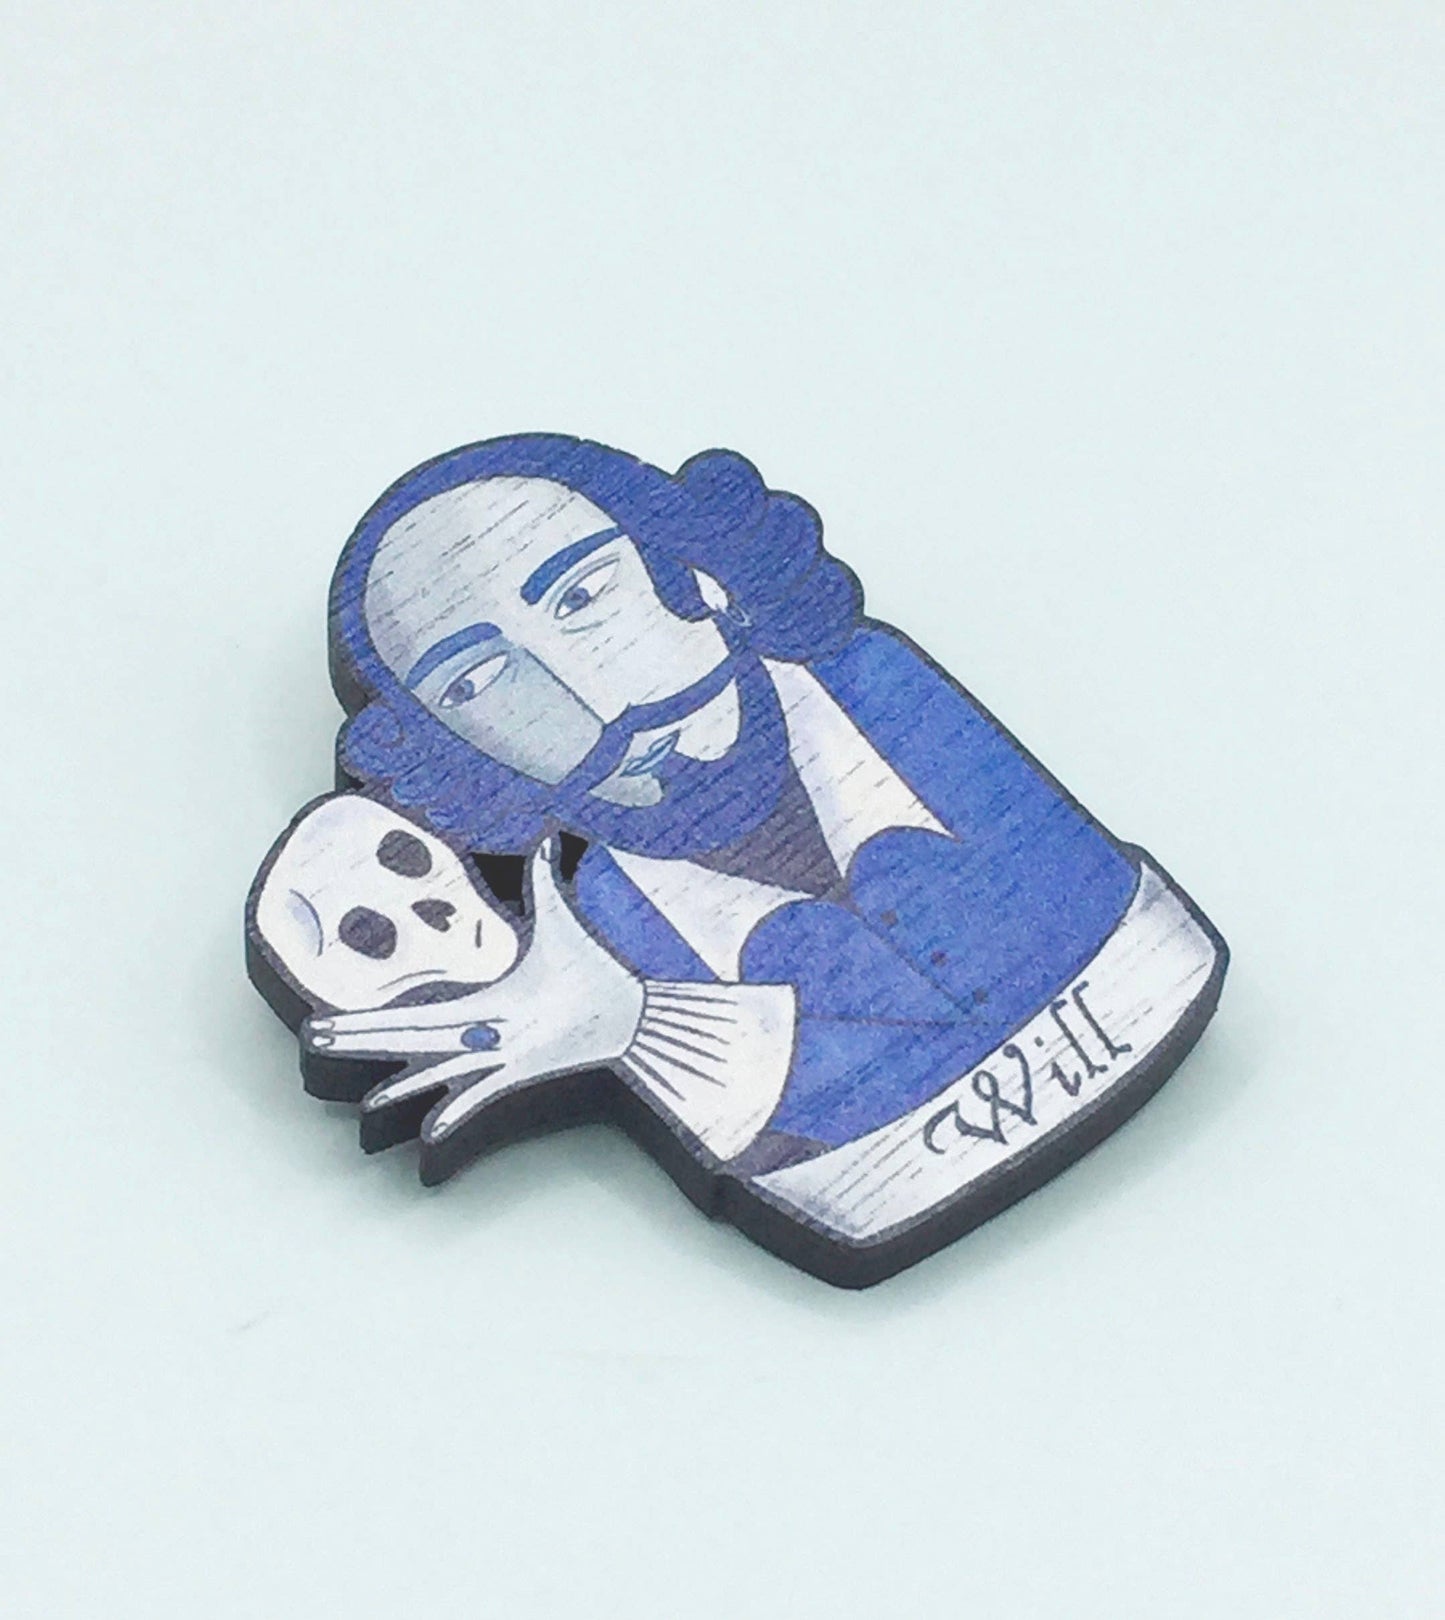 William Shakespeare Wooden Pin Badge